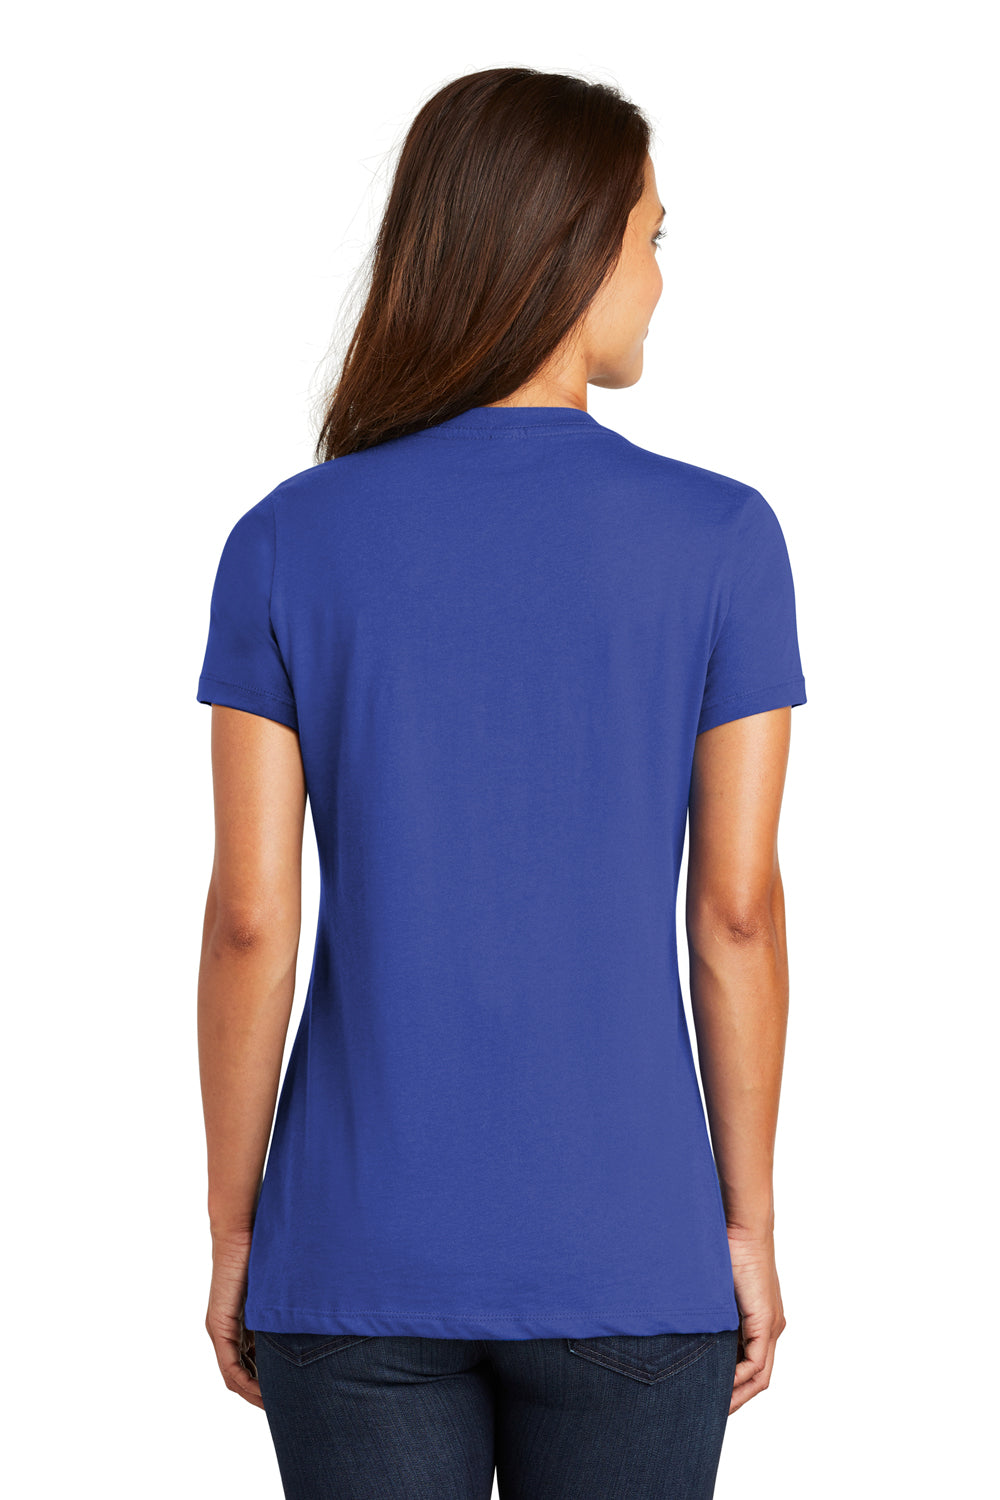 District DM1170L Womens Perfect Weight Short Sleeve V-Neck T-Shirt Royal Blue Back